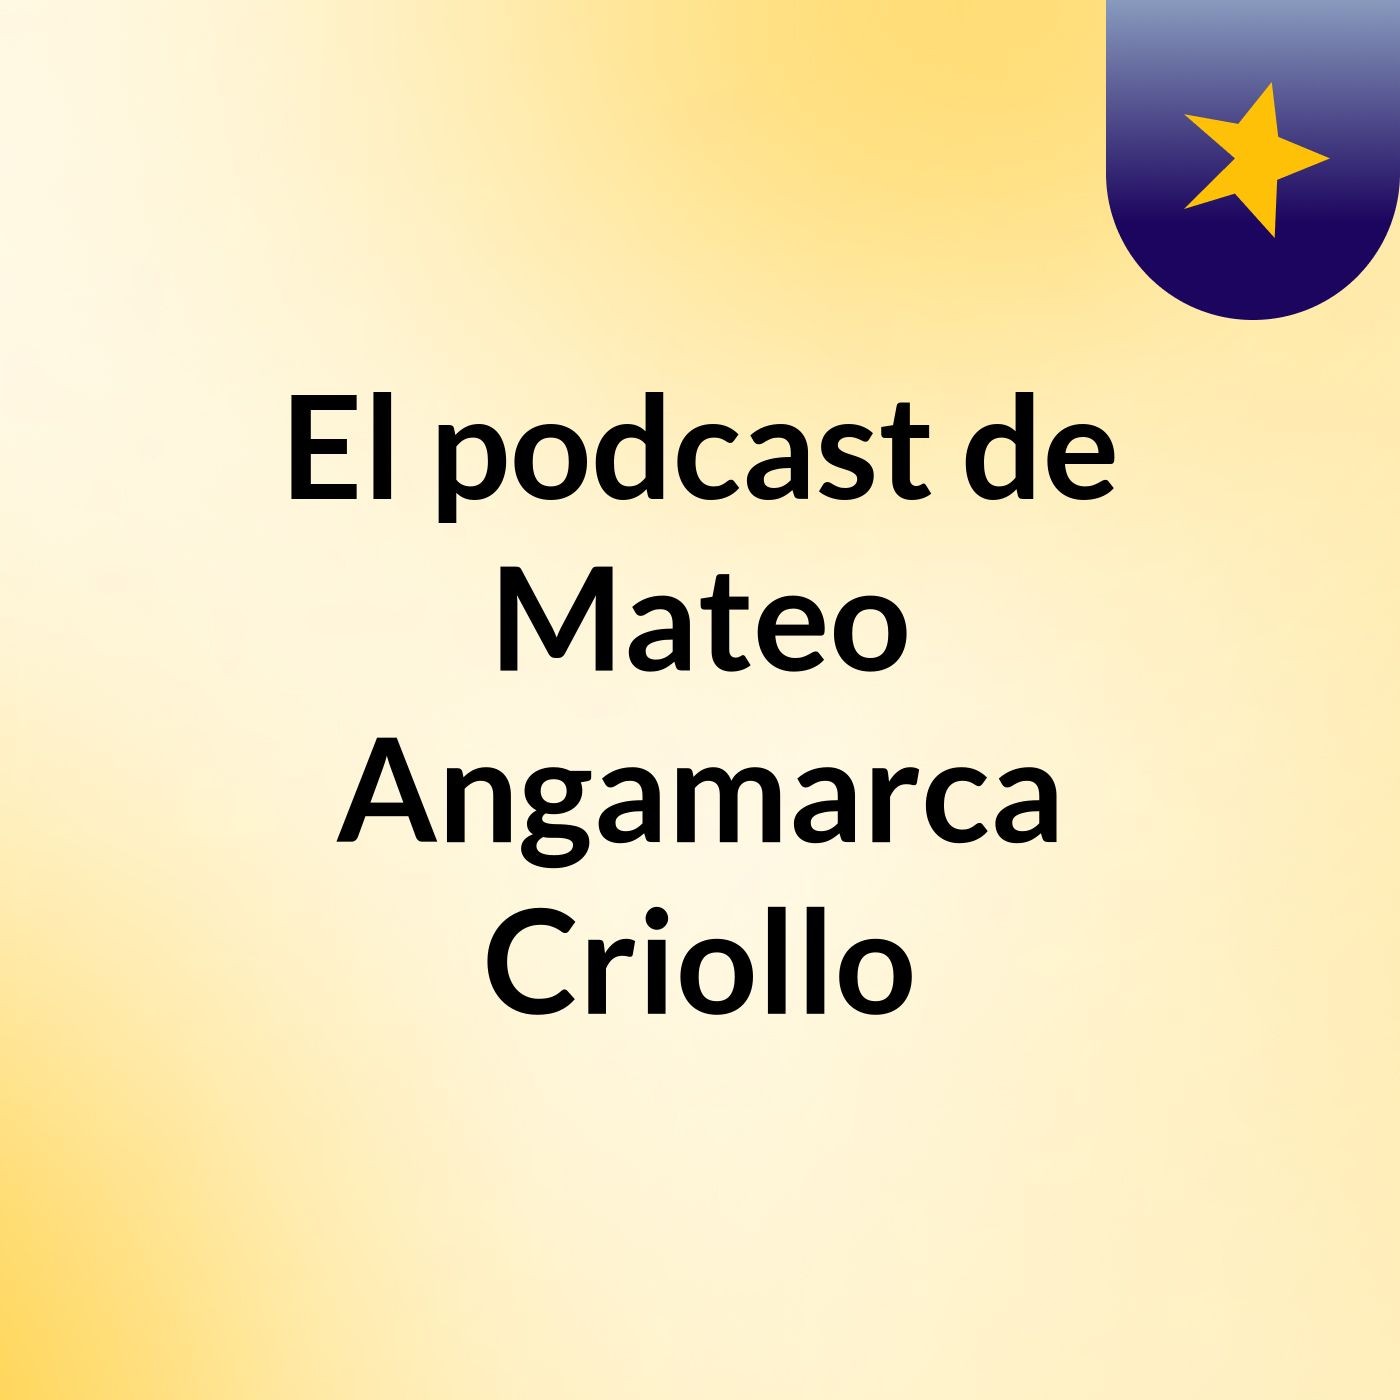 El podcast de Mateo Angamarca Criollo